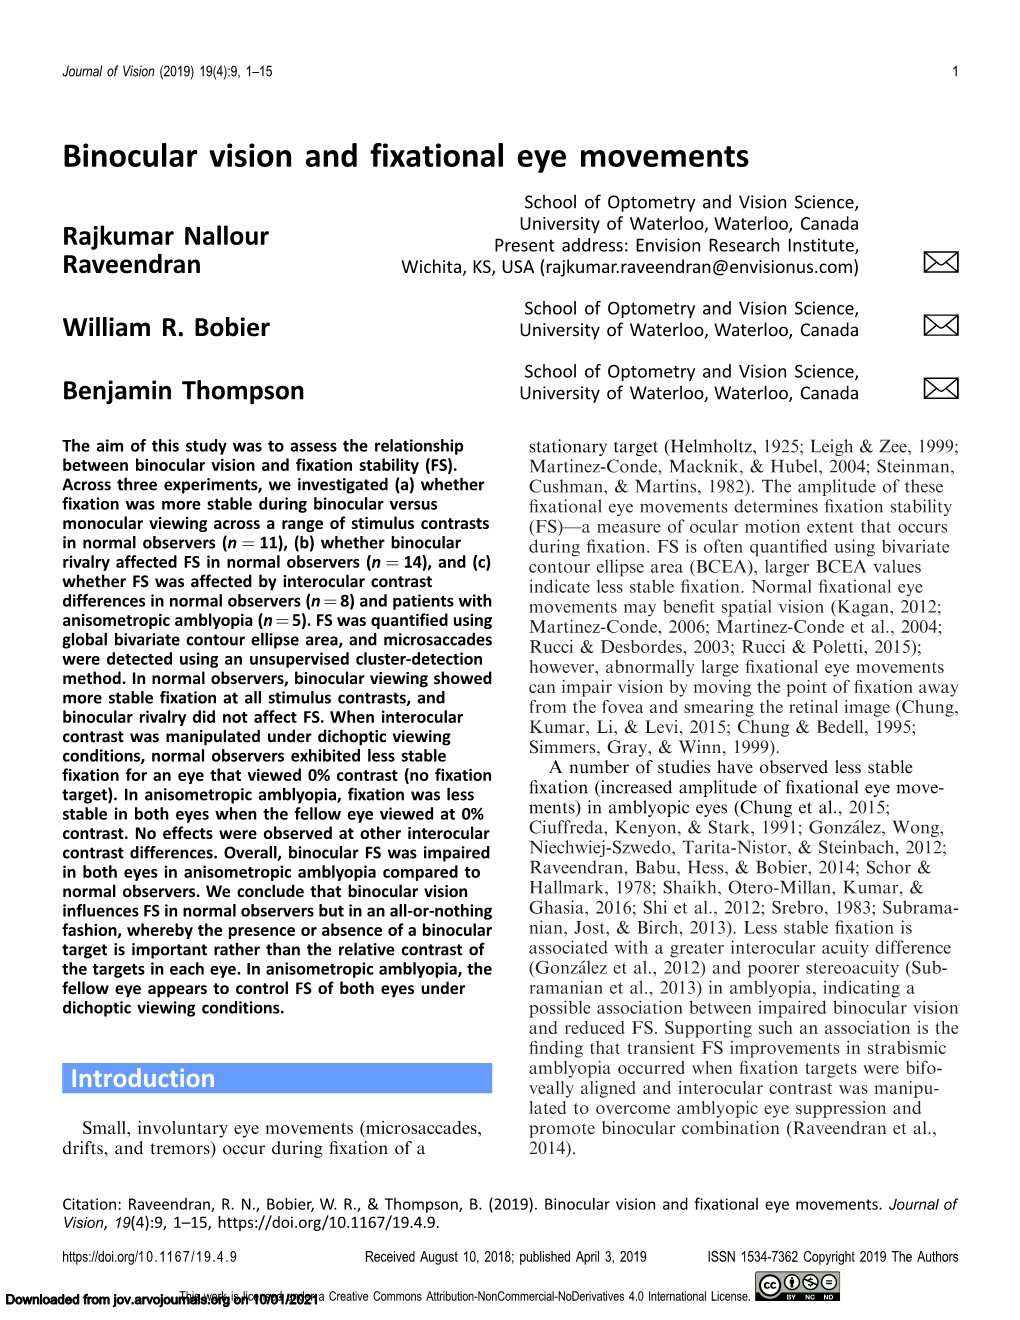 Binocular Vision and Fixational Eye Movements